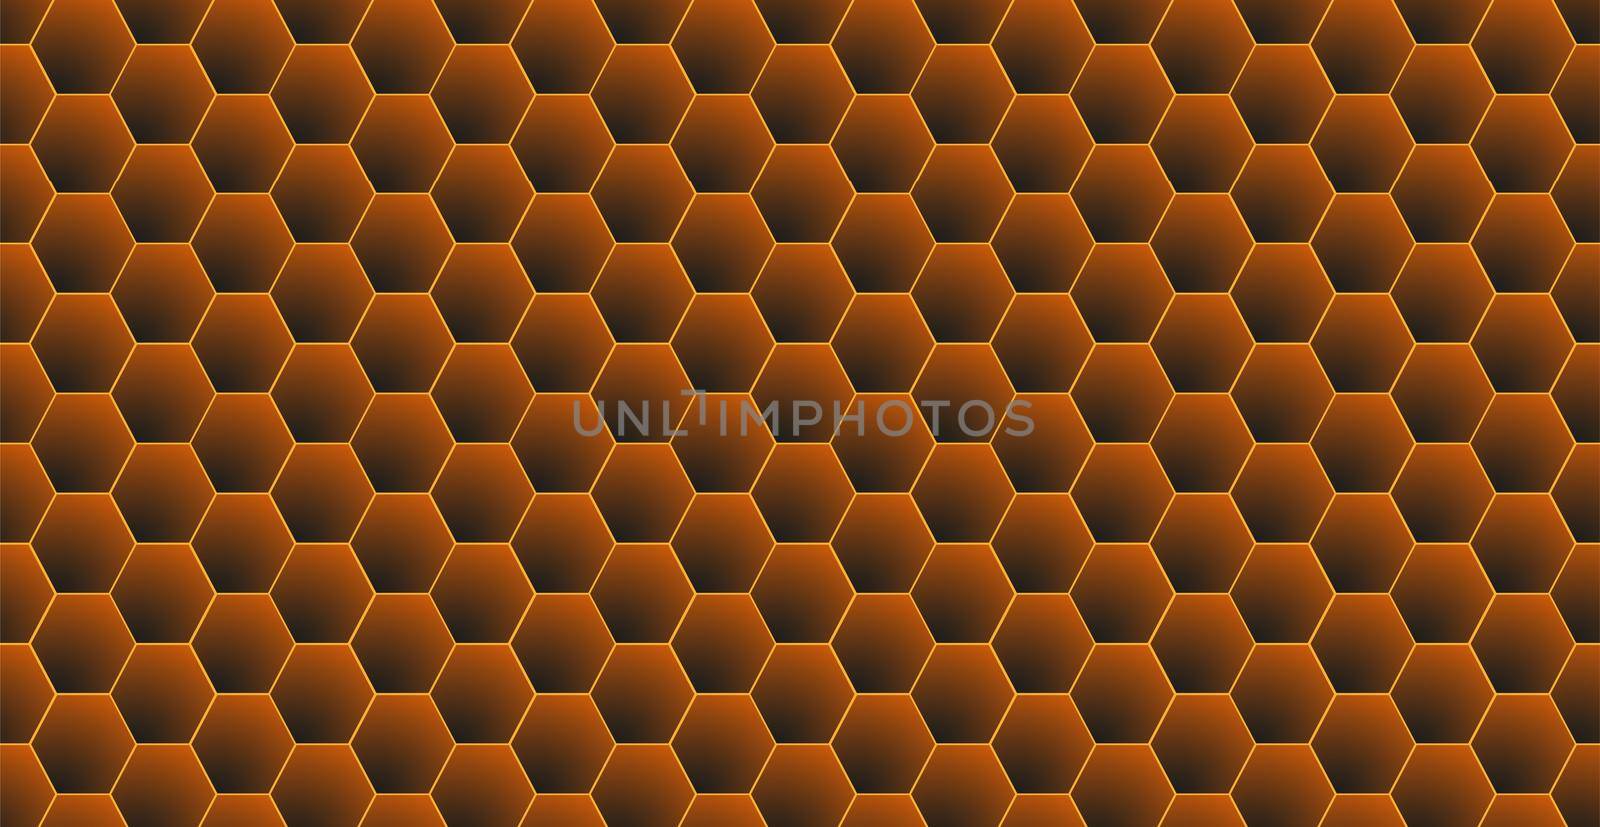 Honeycomb Pattern by AndreyKENO